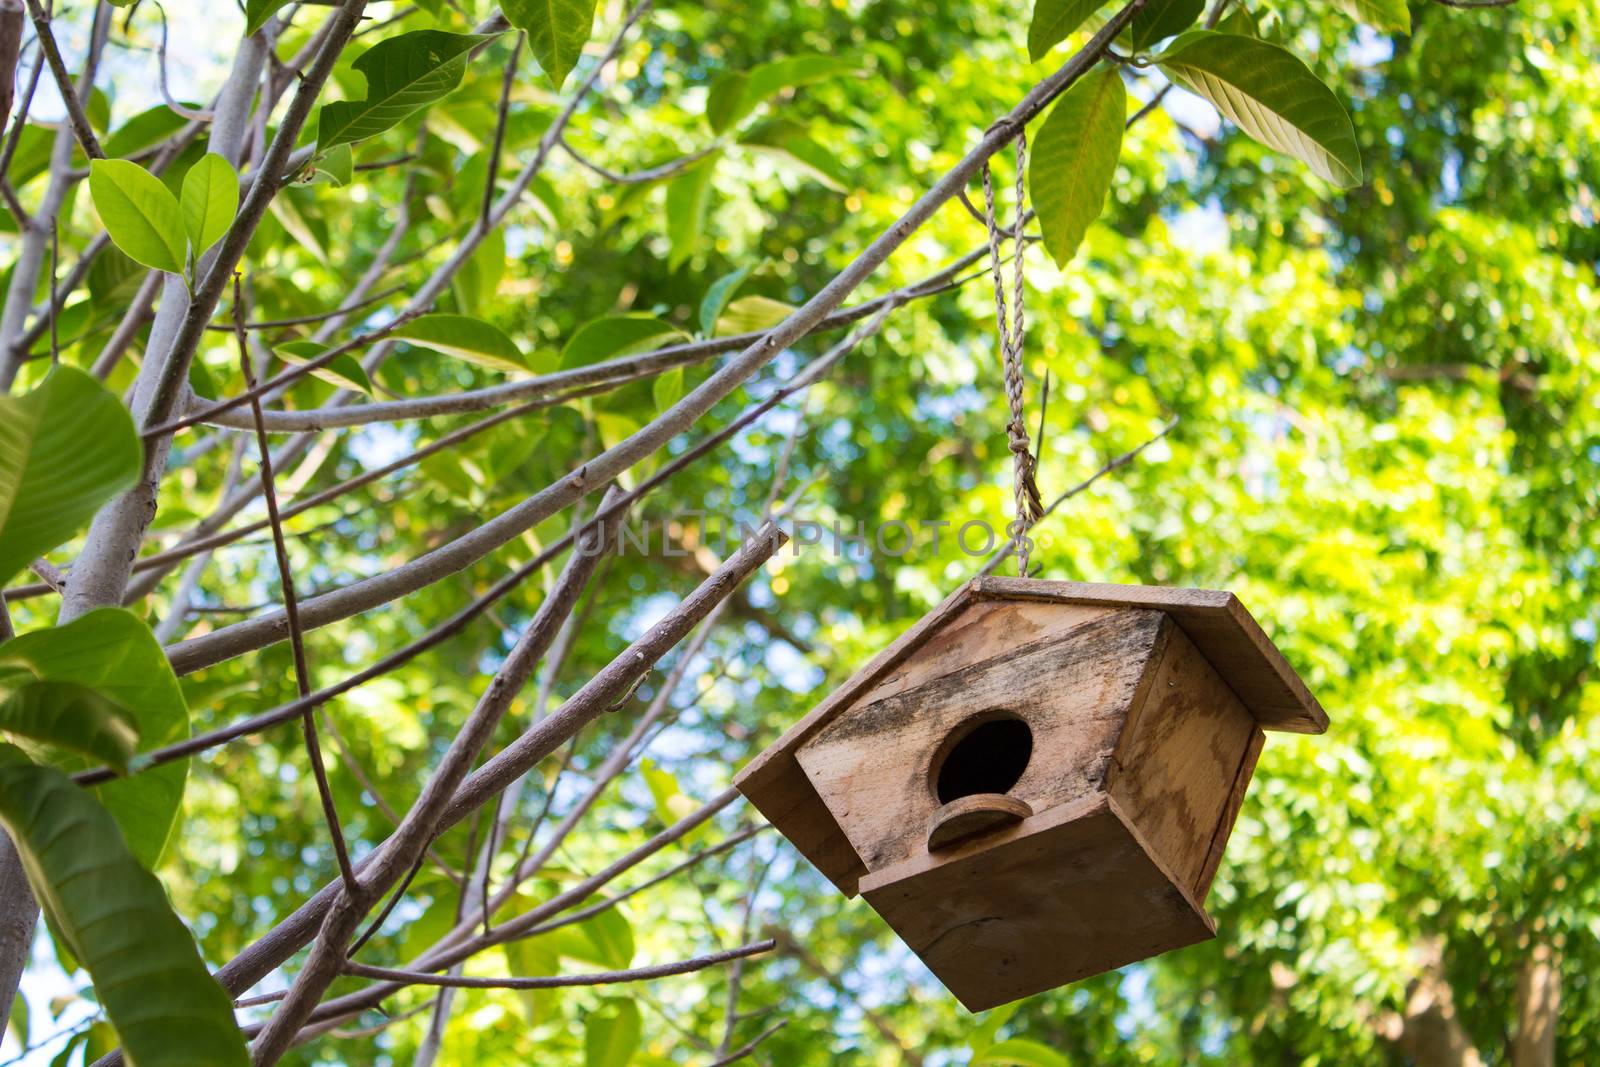 A birdhouse nestled on tree